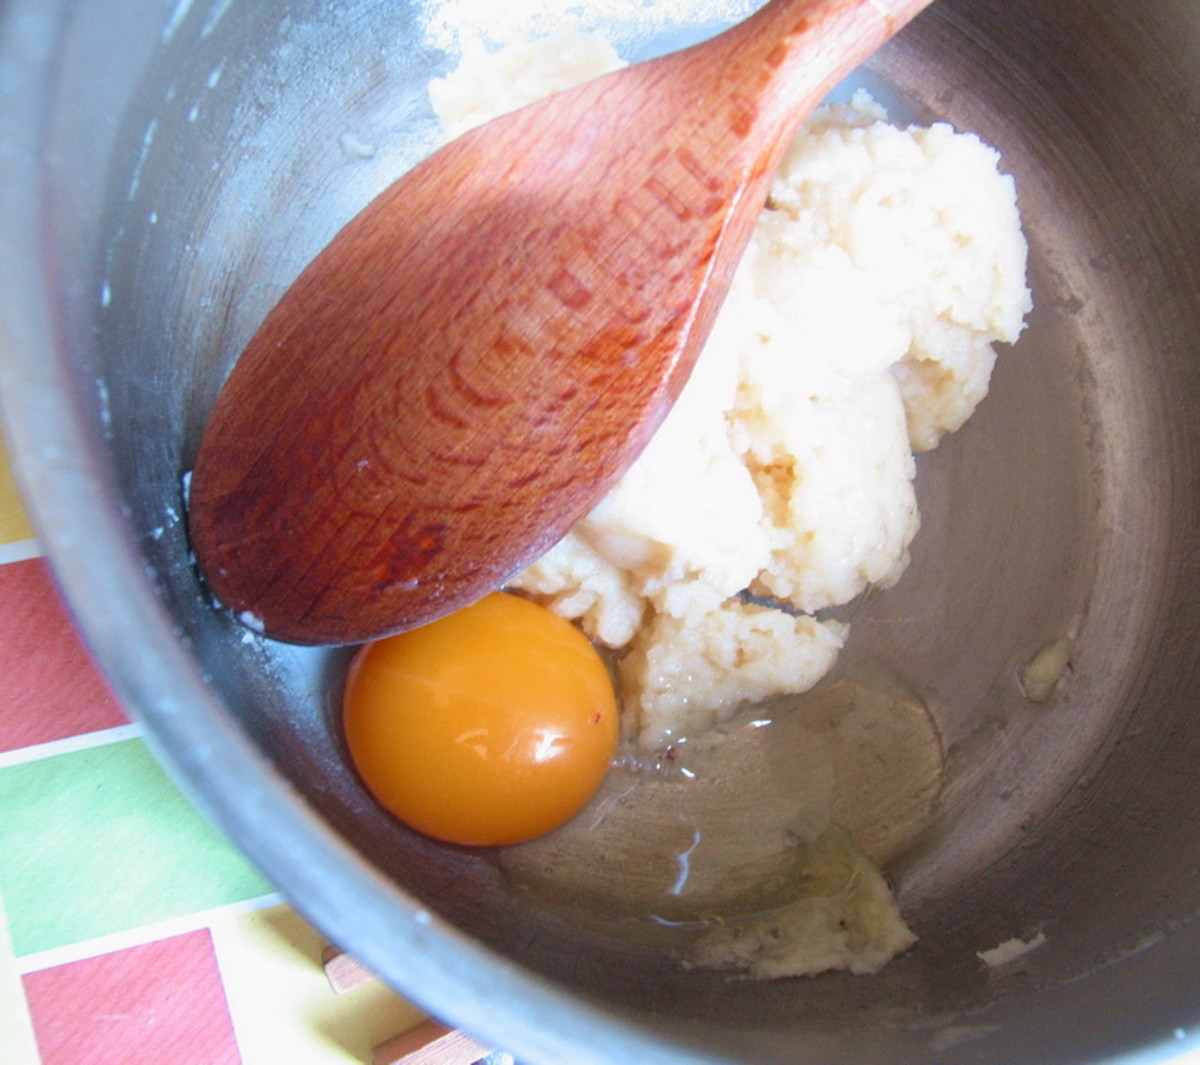 Add egg